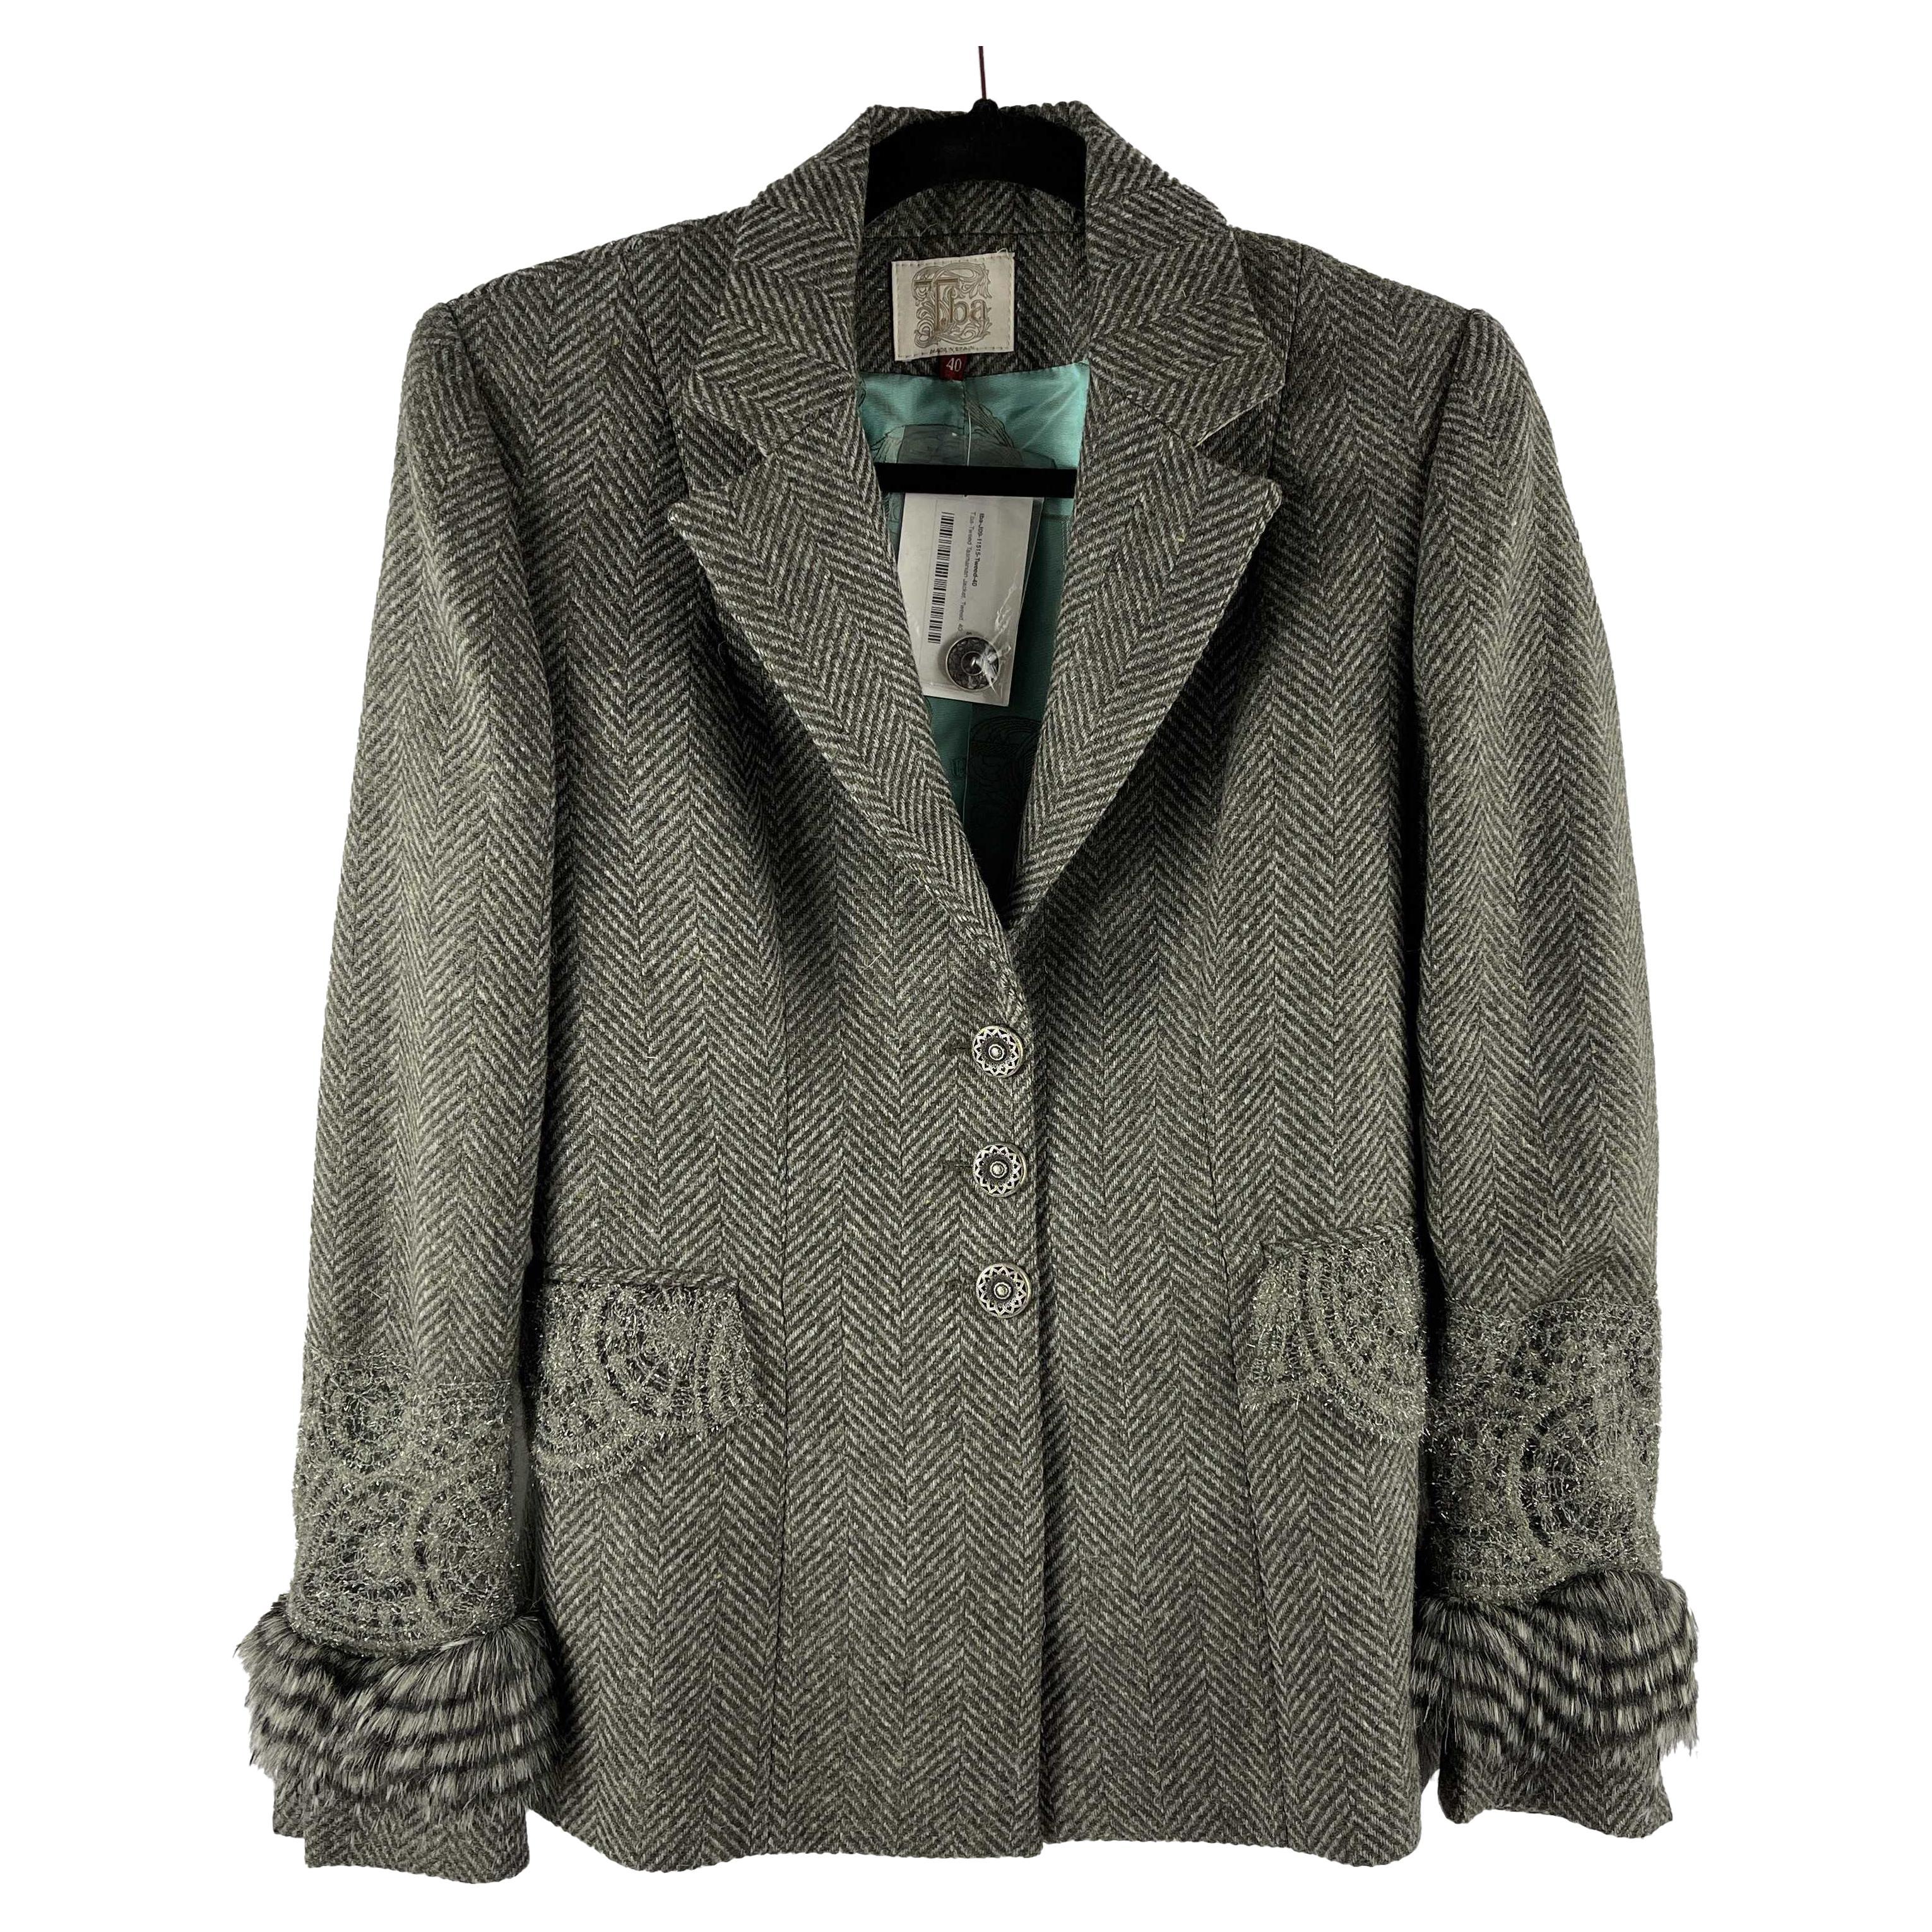 T.ba New w/ Tags Tasmanian Tweed Lace Faux Fur Grey / Brown 40 US Medium For Sale